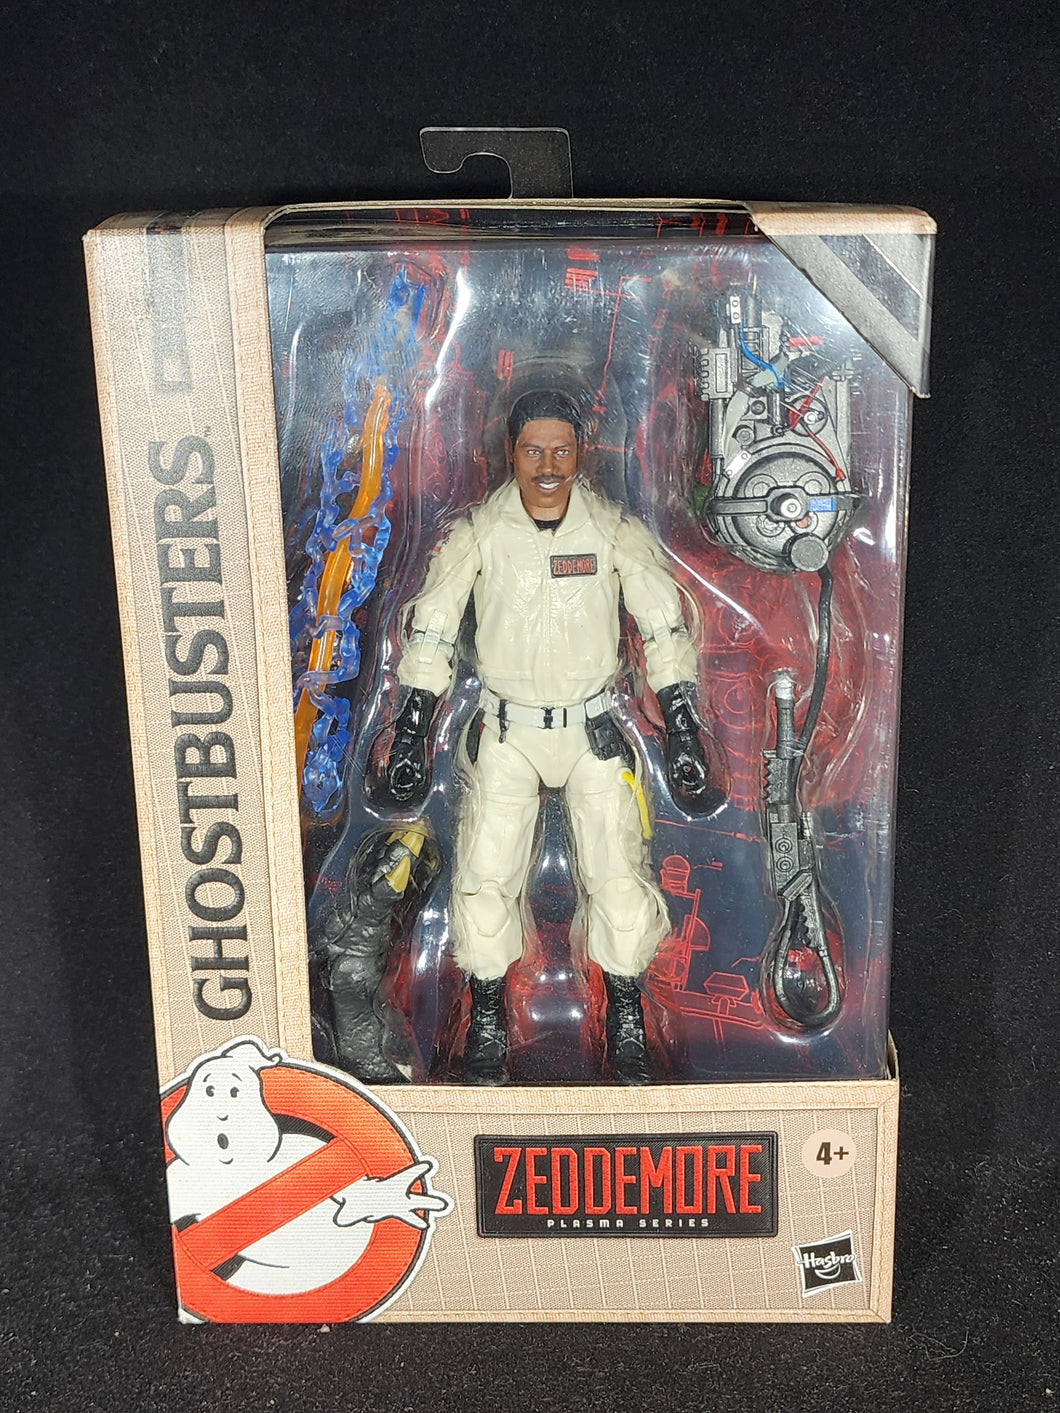 Ghostbusters Plasma Series Winston Zeddemore 6 inch Action Figure Hasbro